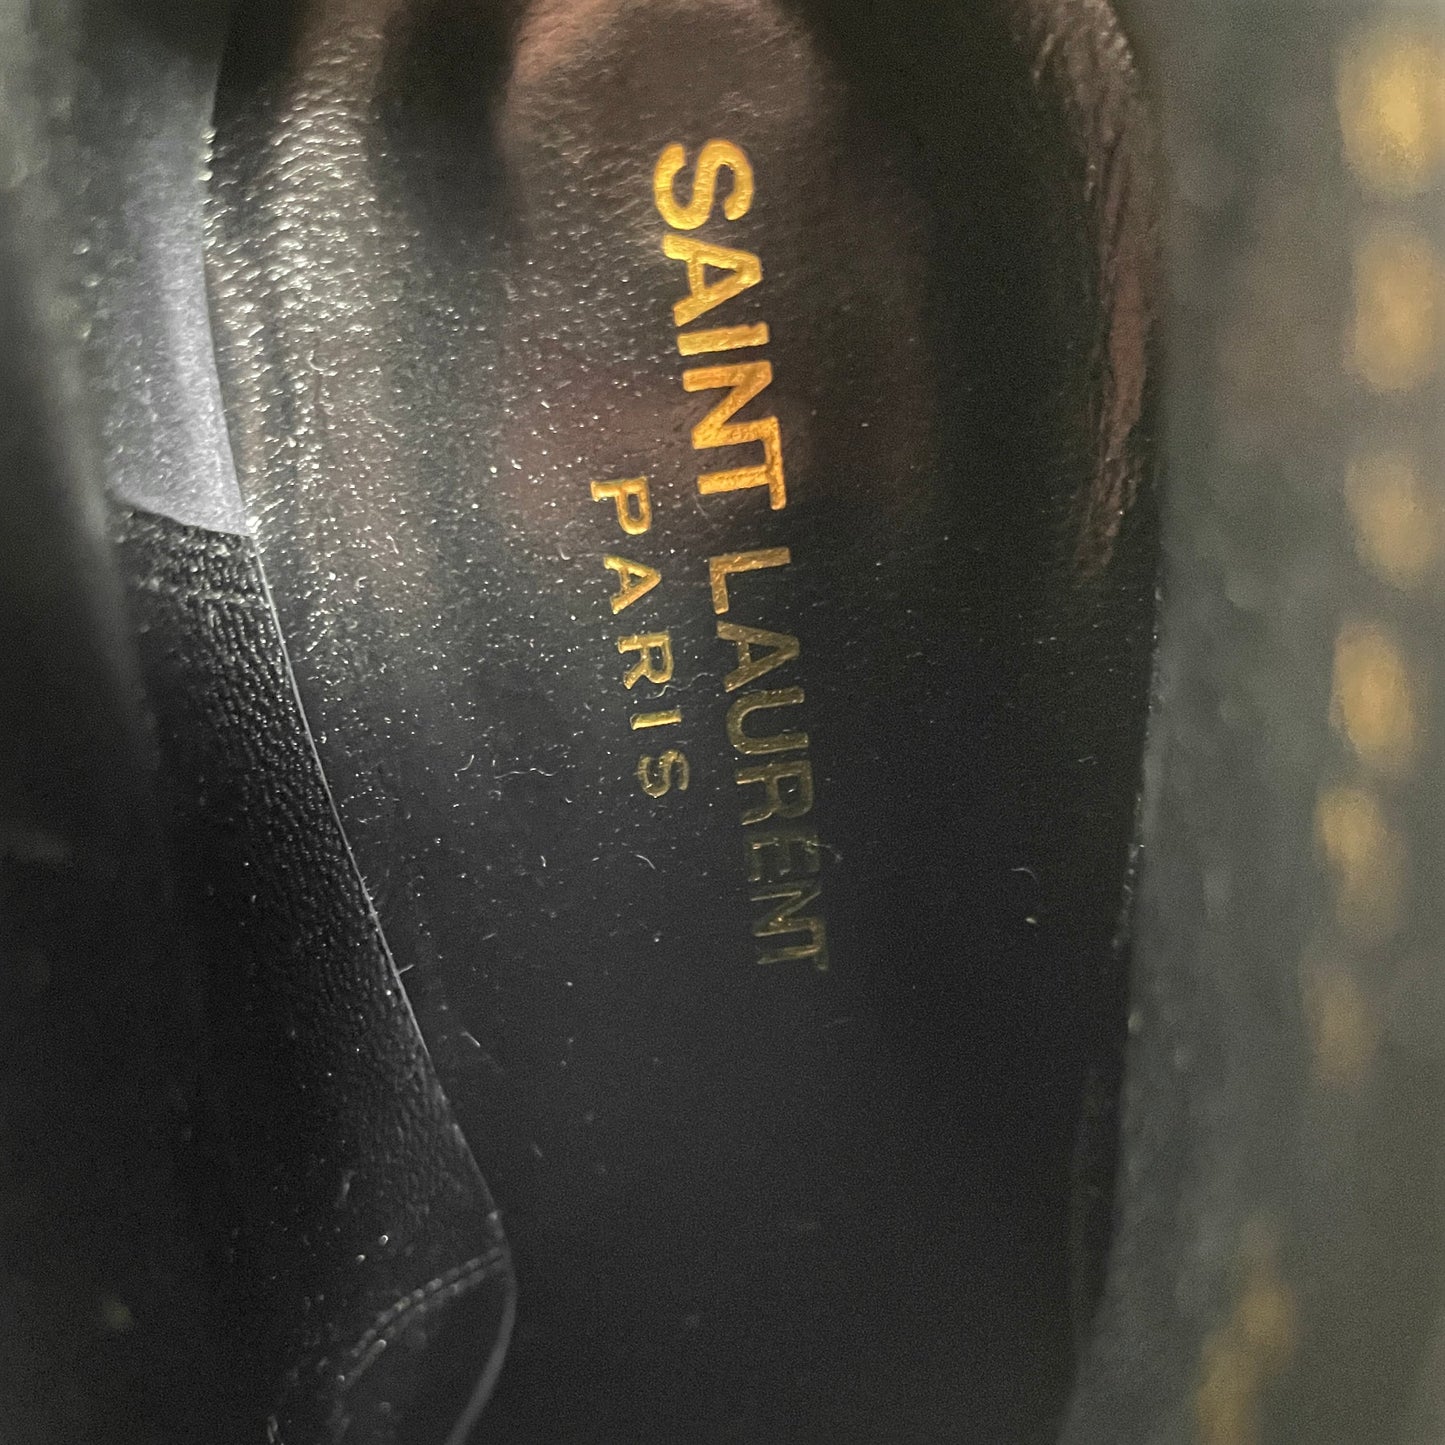 Saint Laurent Suede Pointed Buckle Toe Ankle Boots Size EU 38